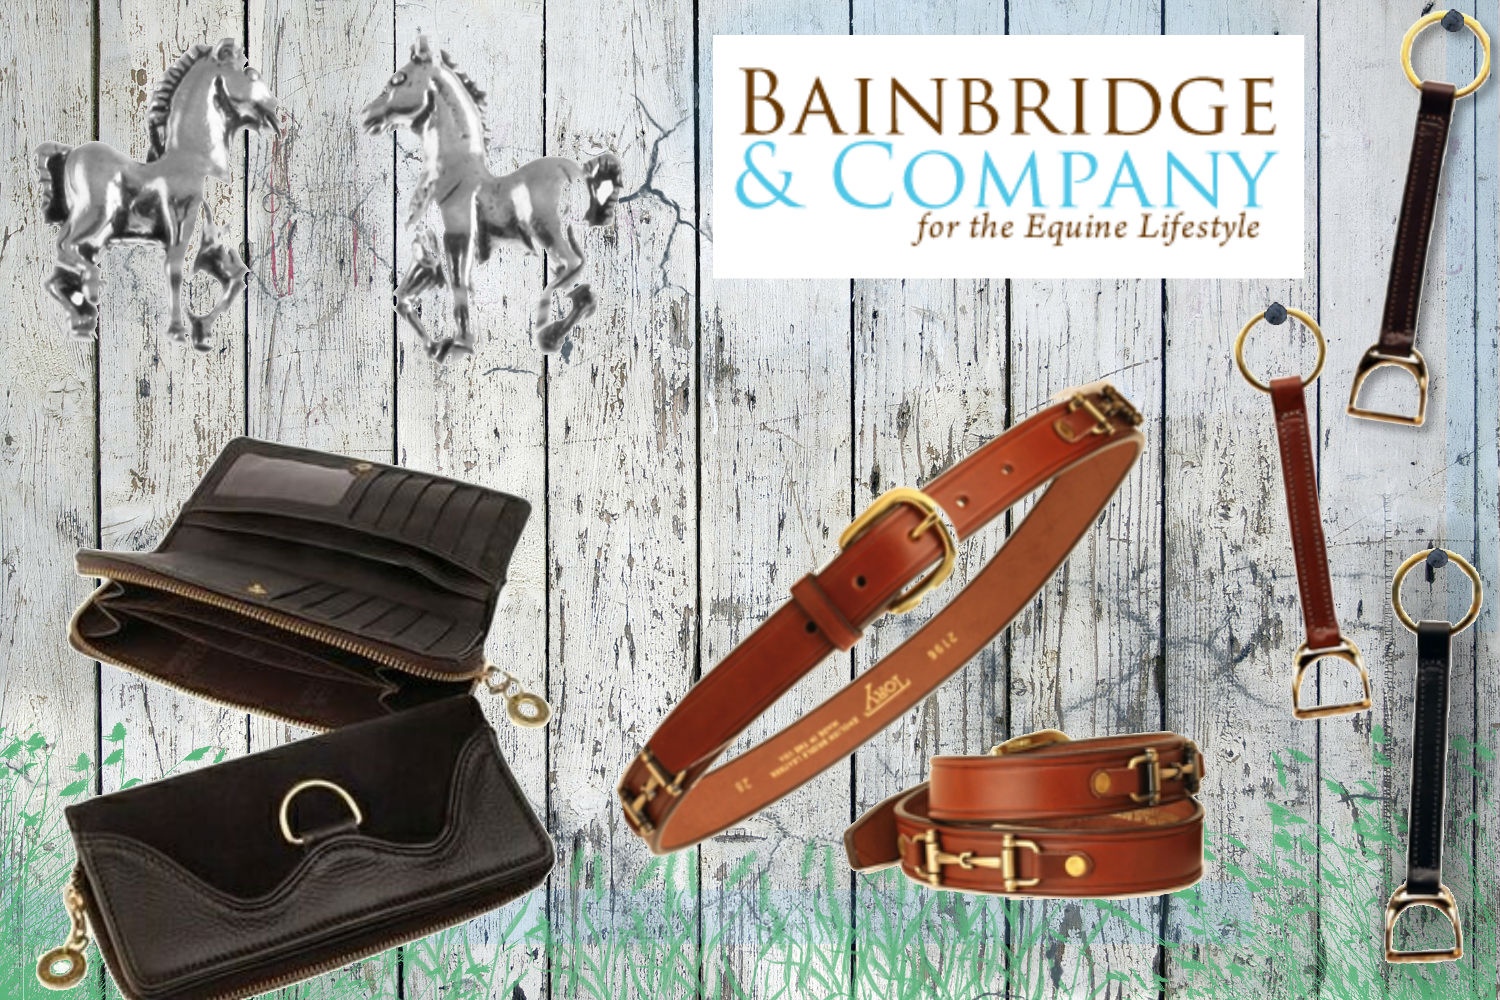 Featuring Bainbridge & Company Equestrian Gifts & Accessories